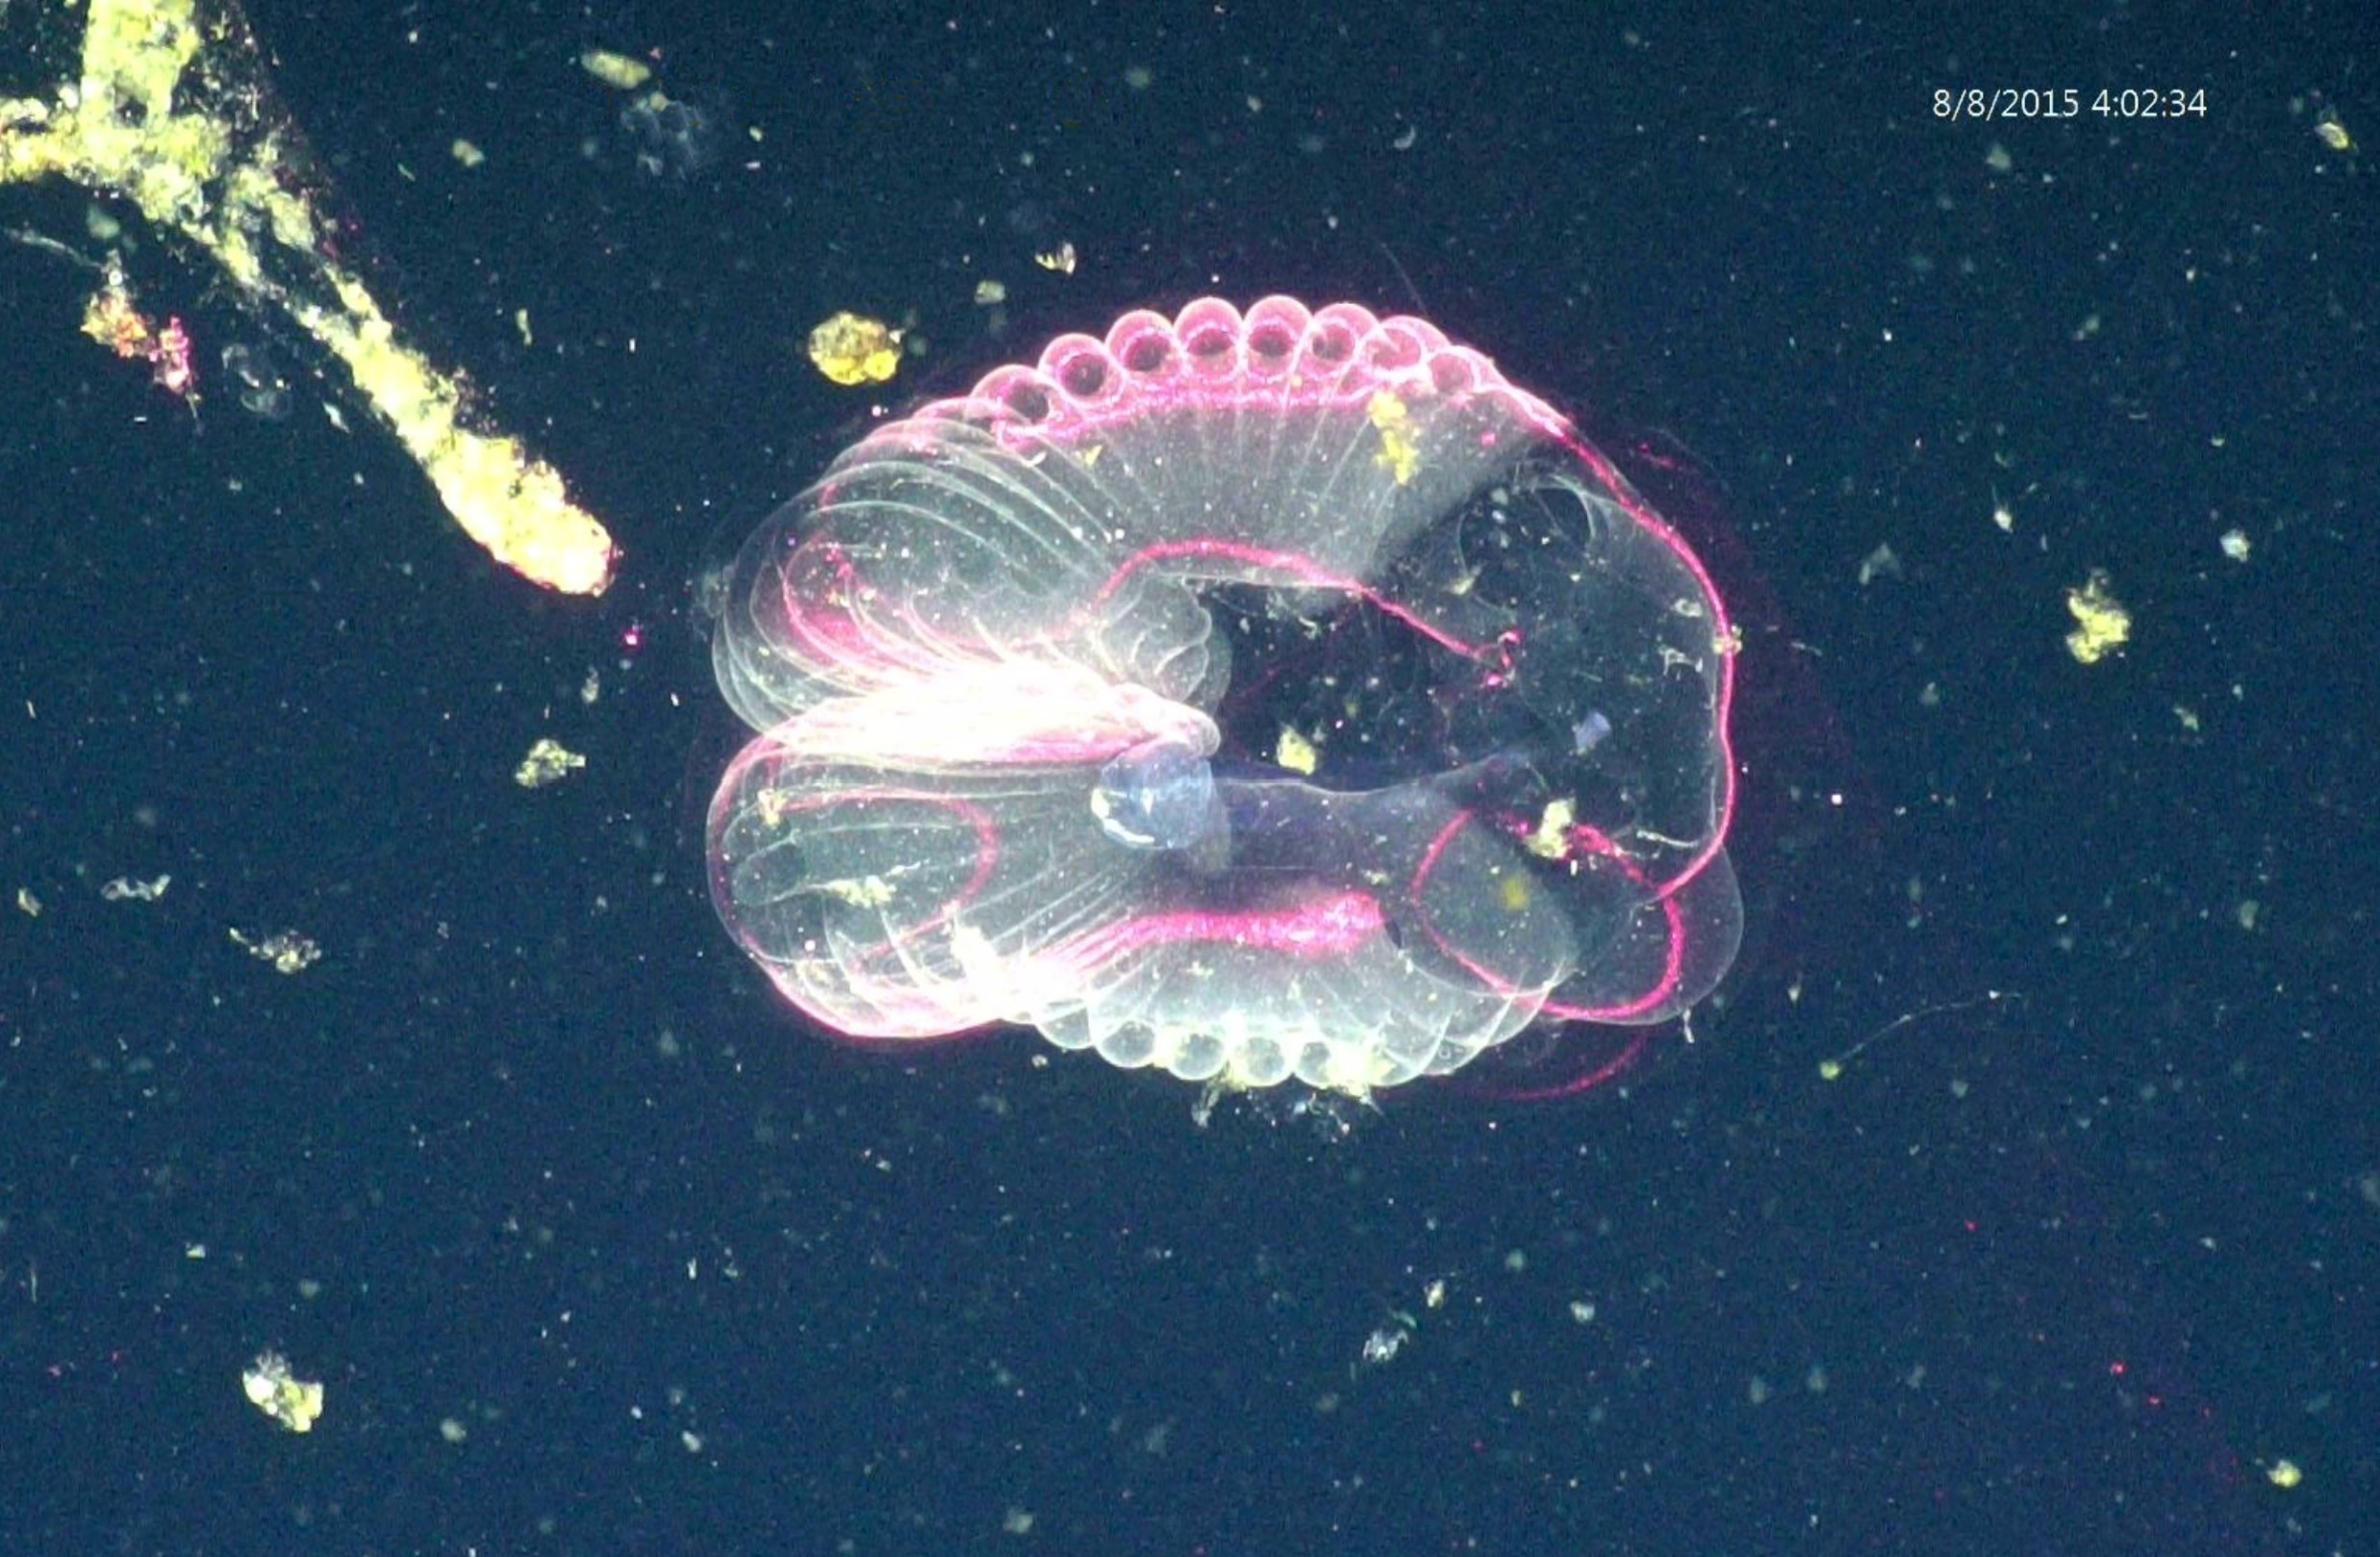 A deep sea larvacean illuminated by laser light